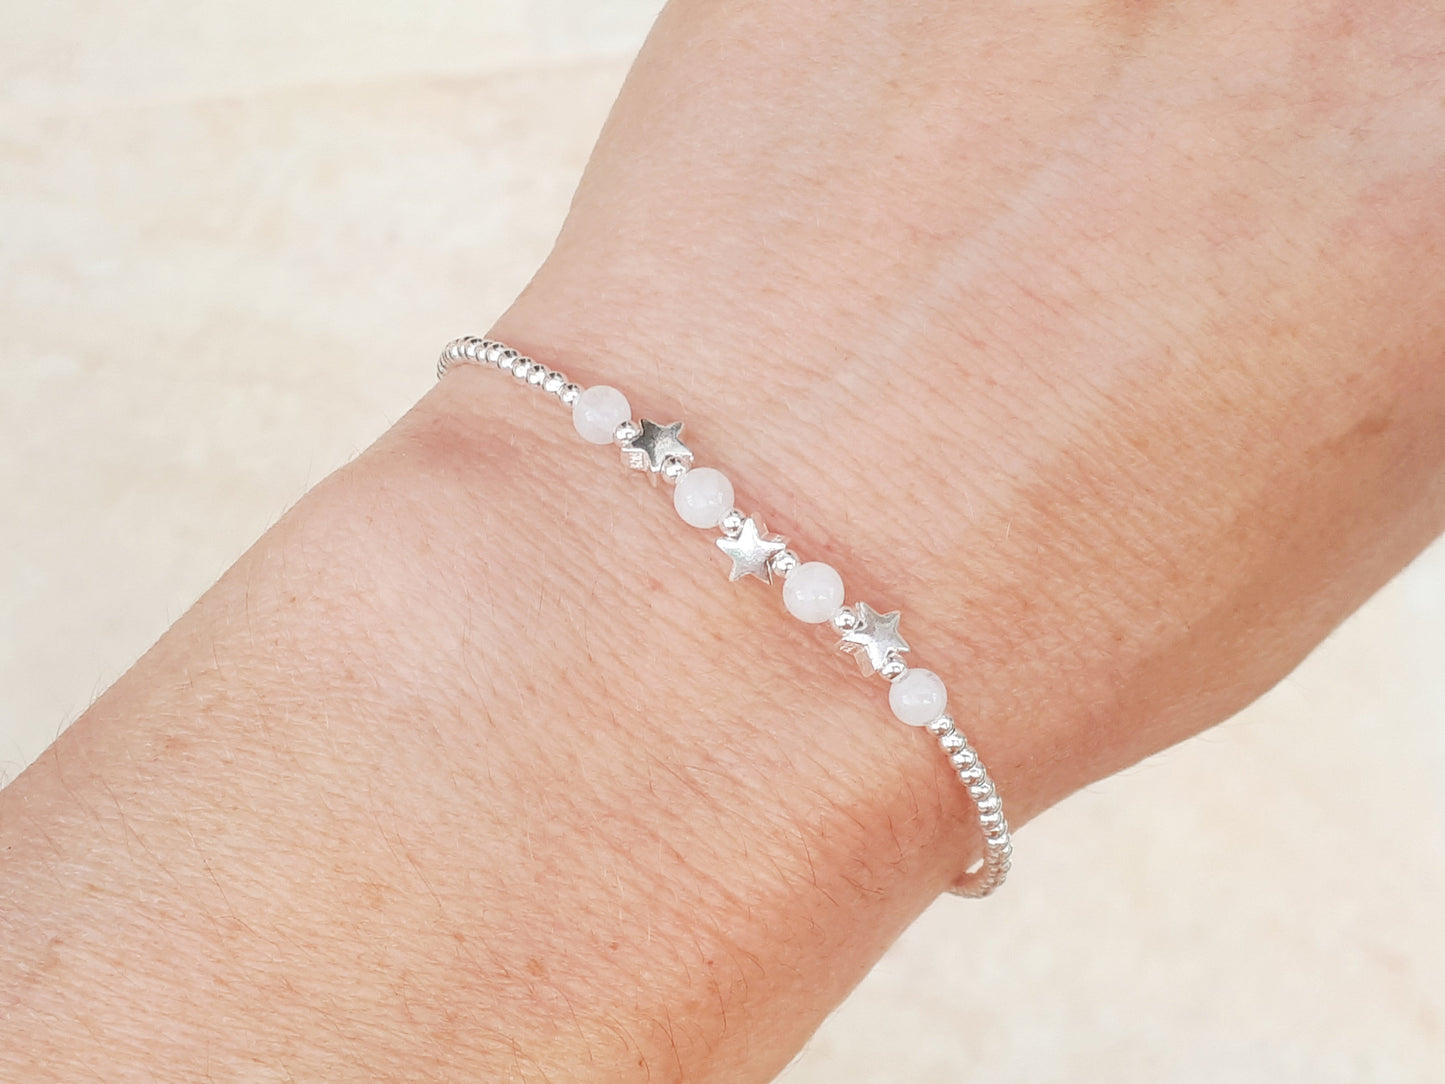 Star bracelet with moonstone beads.